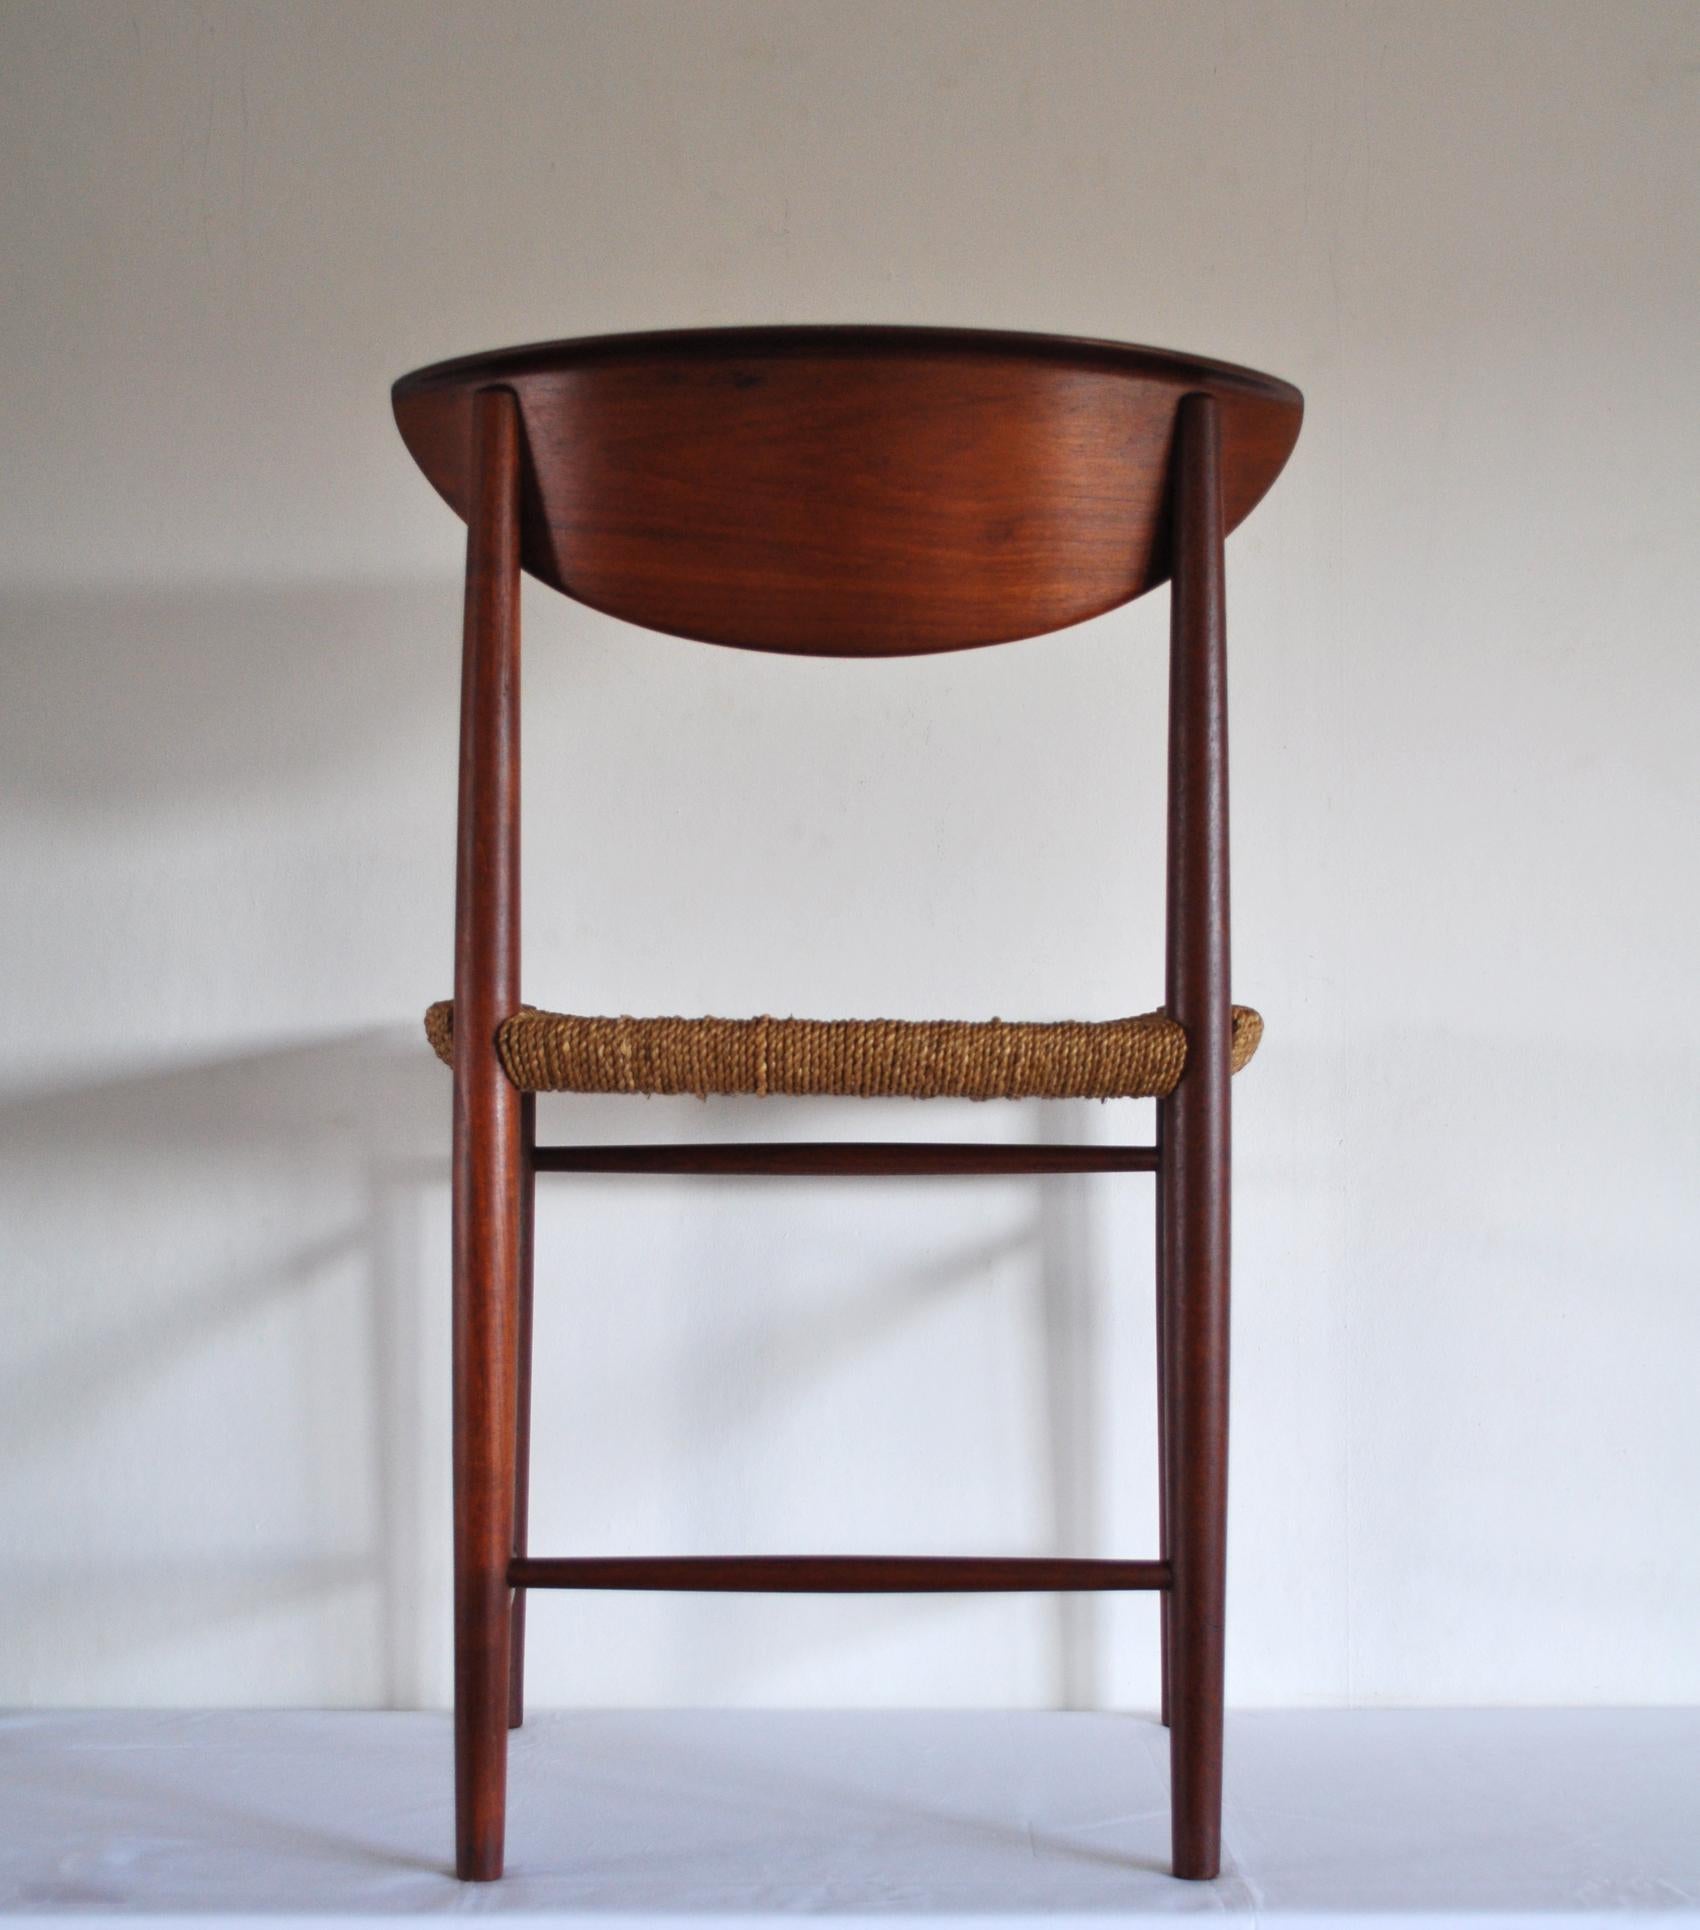 Scandinavian Modern Dining Chair by Peter Hvidt & Orla Mølgaard-Nielsen for Søborg Møbelfabrik, 1956 For Sale